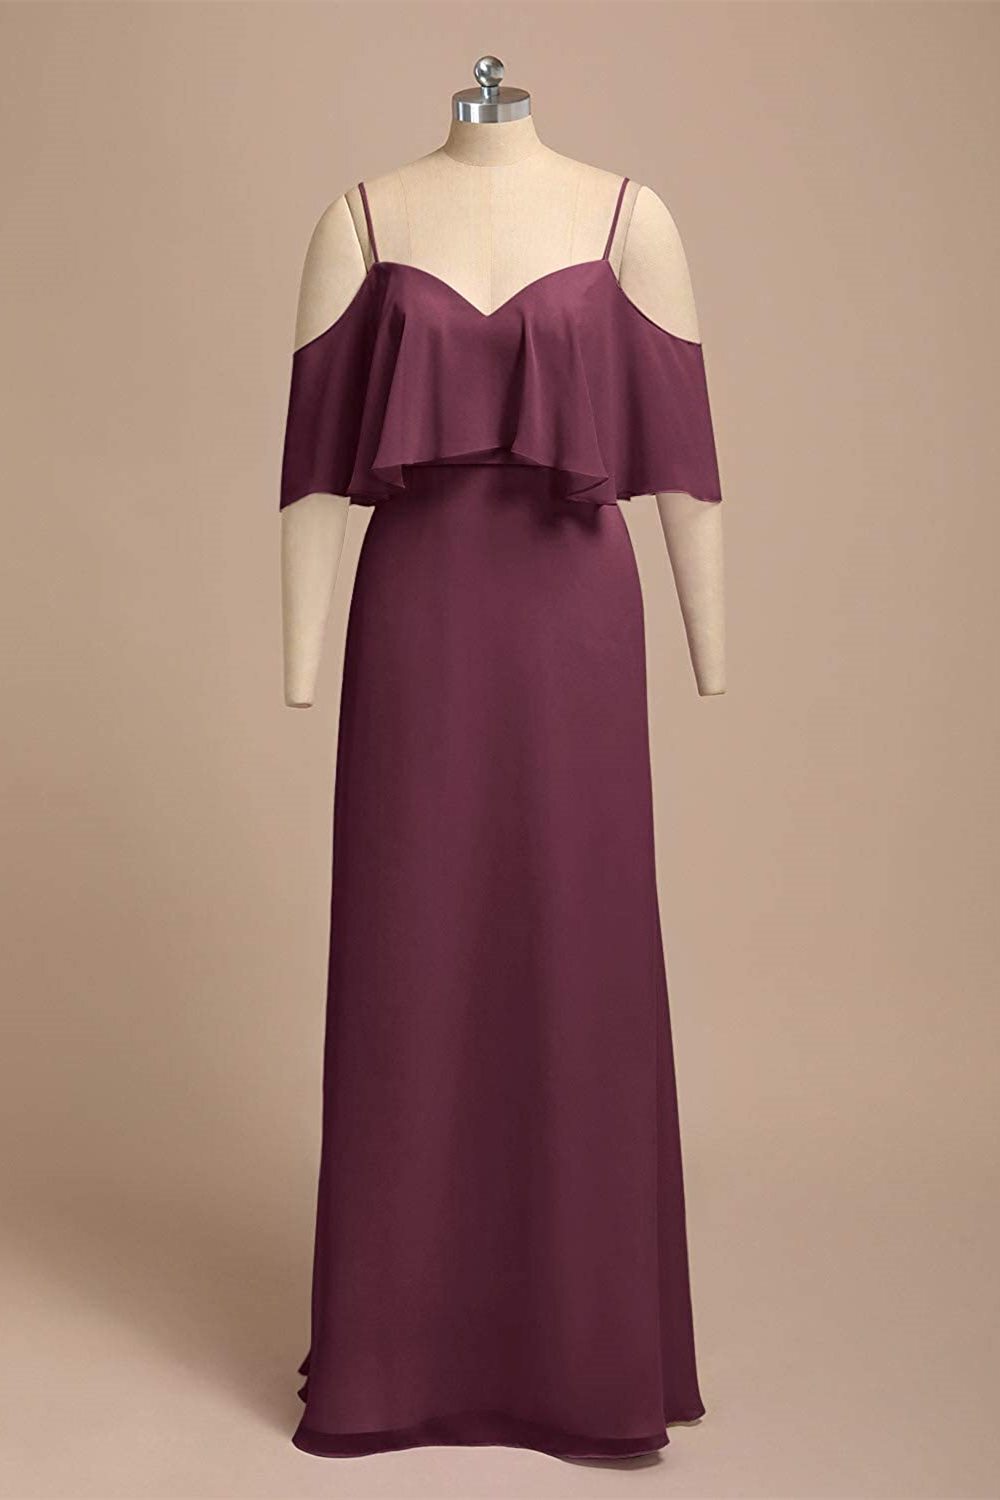 Flounced Burgundy Chiffon Long Bridesmaid Dress